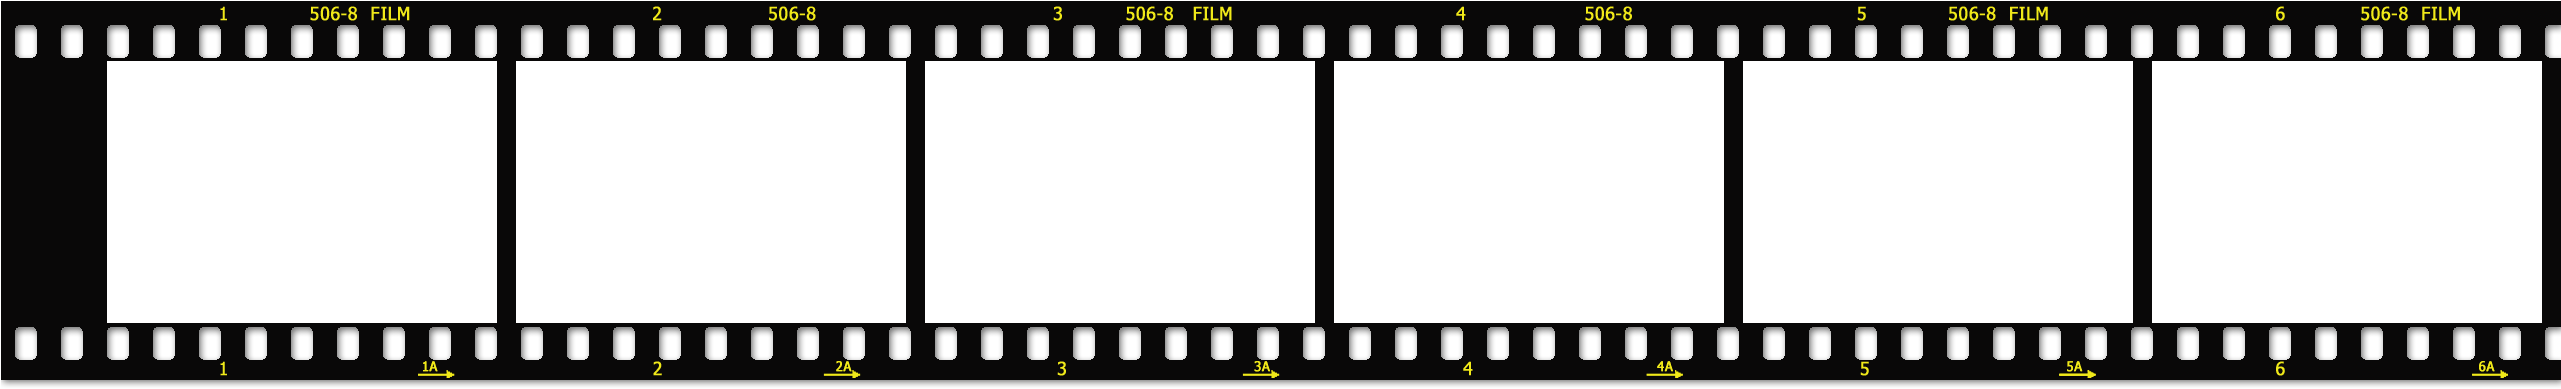 Film Strip Image Template - Film Strip Template Transparent (2560x2560)